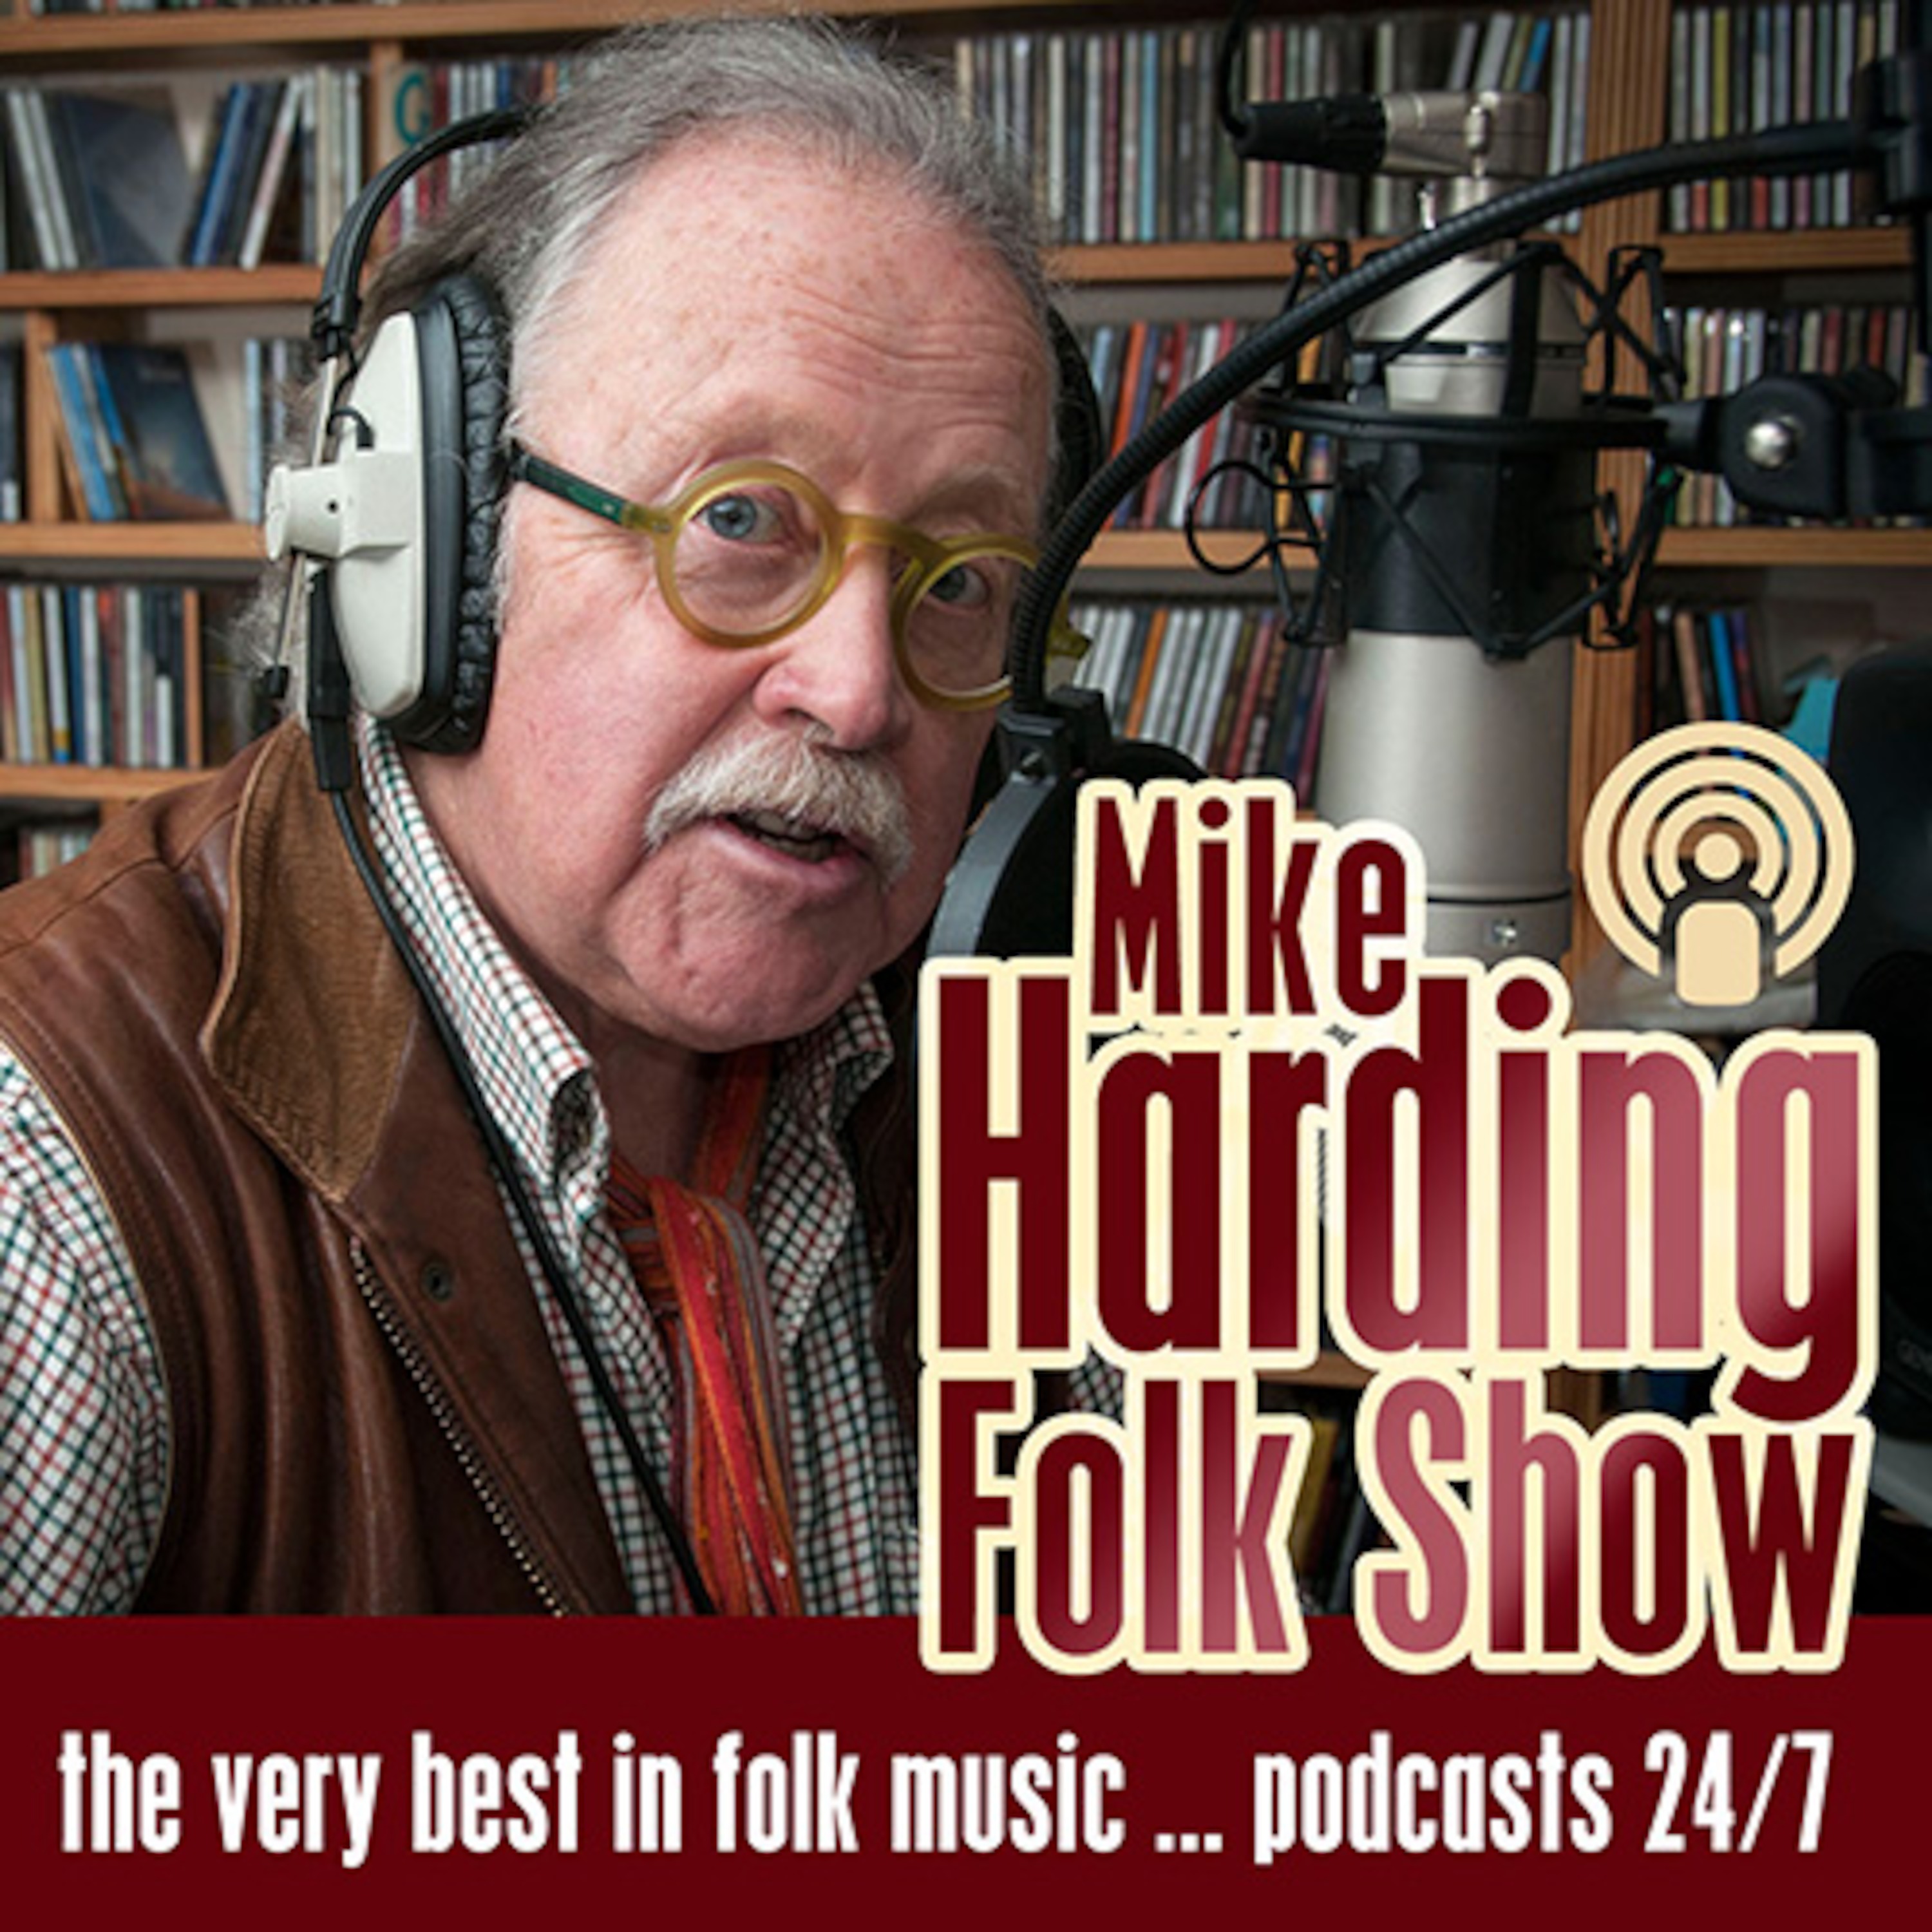 Mike Harding Folk Show 95